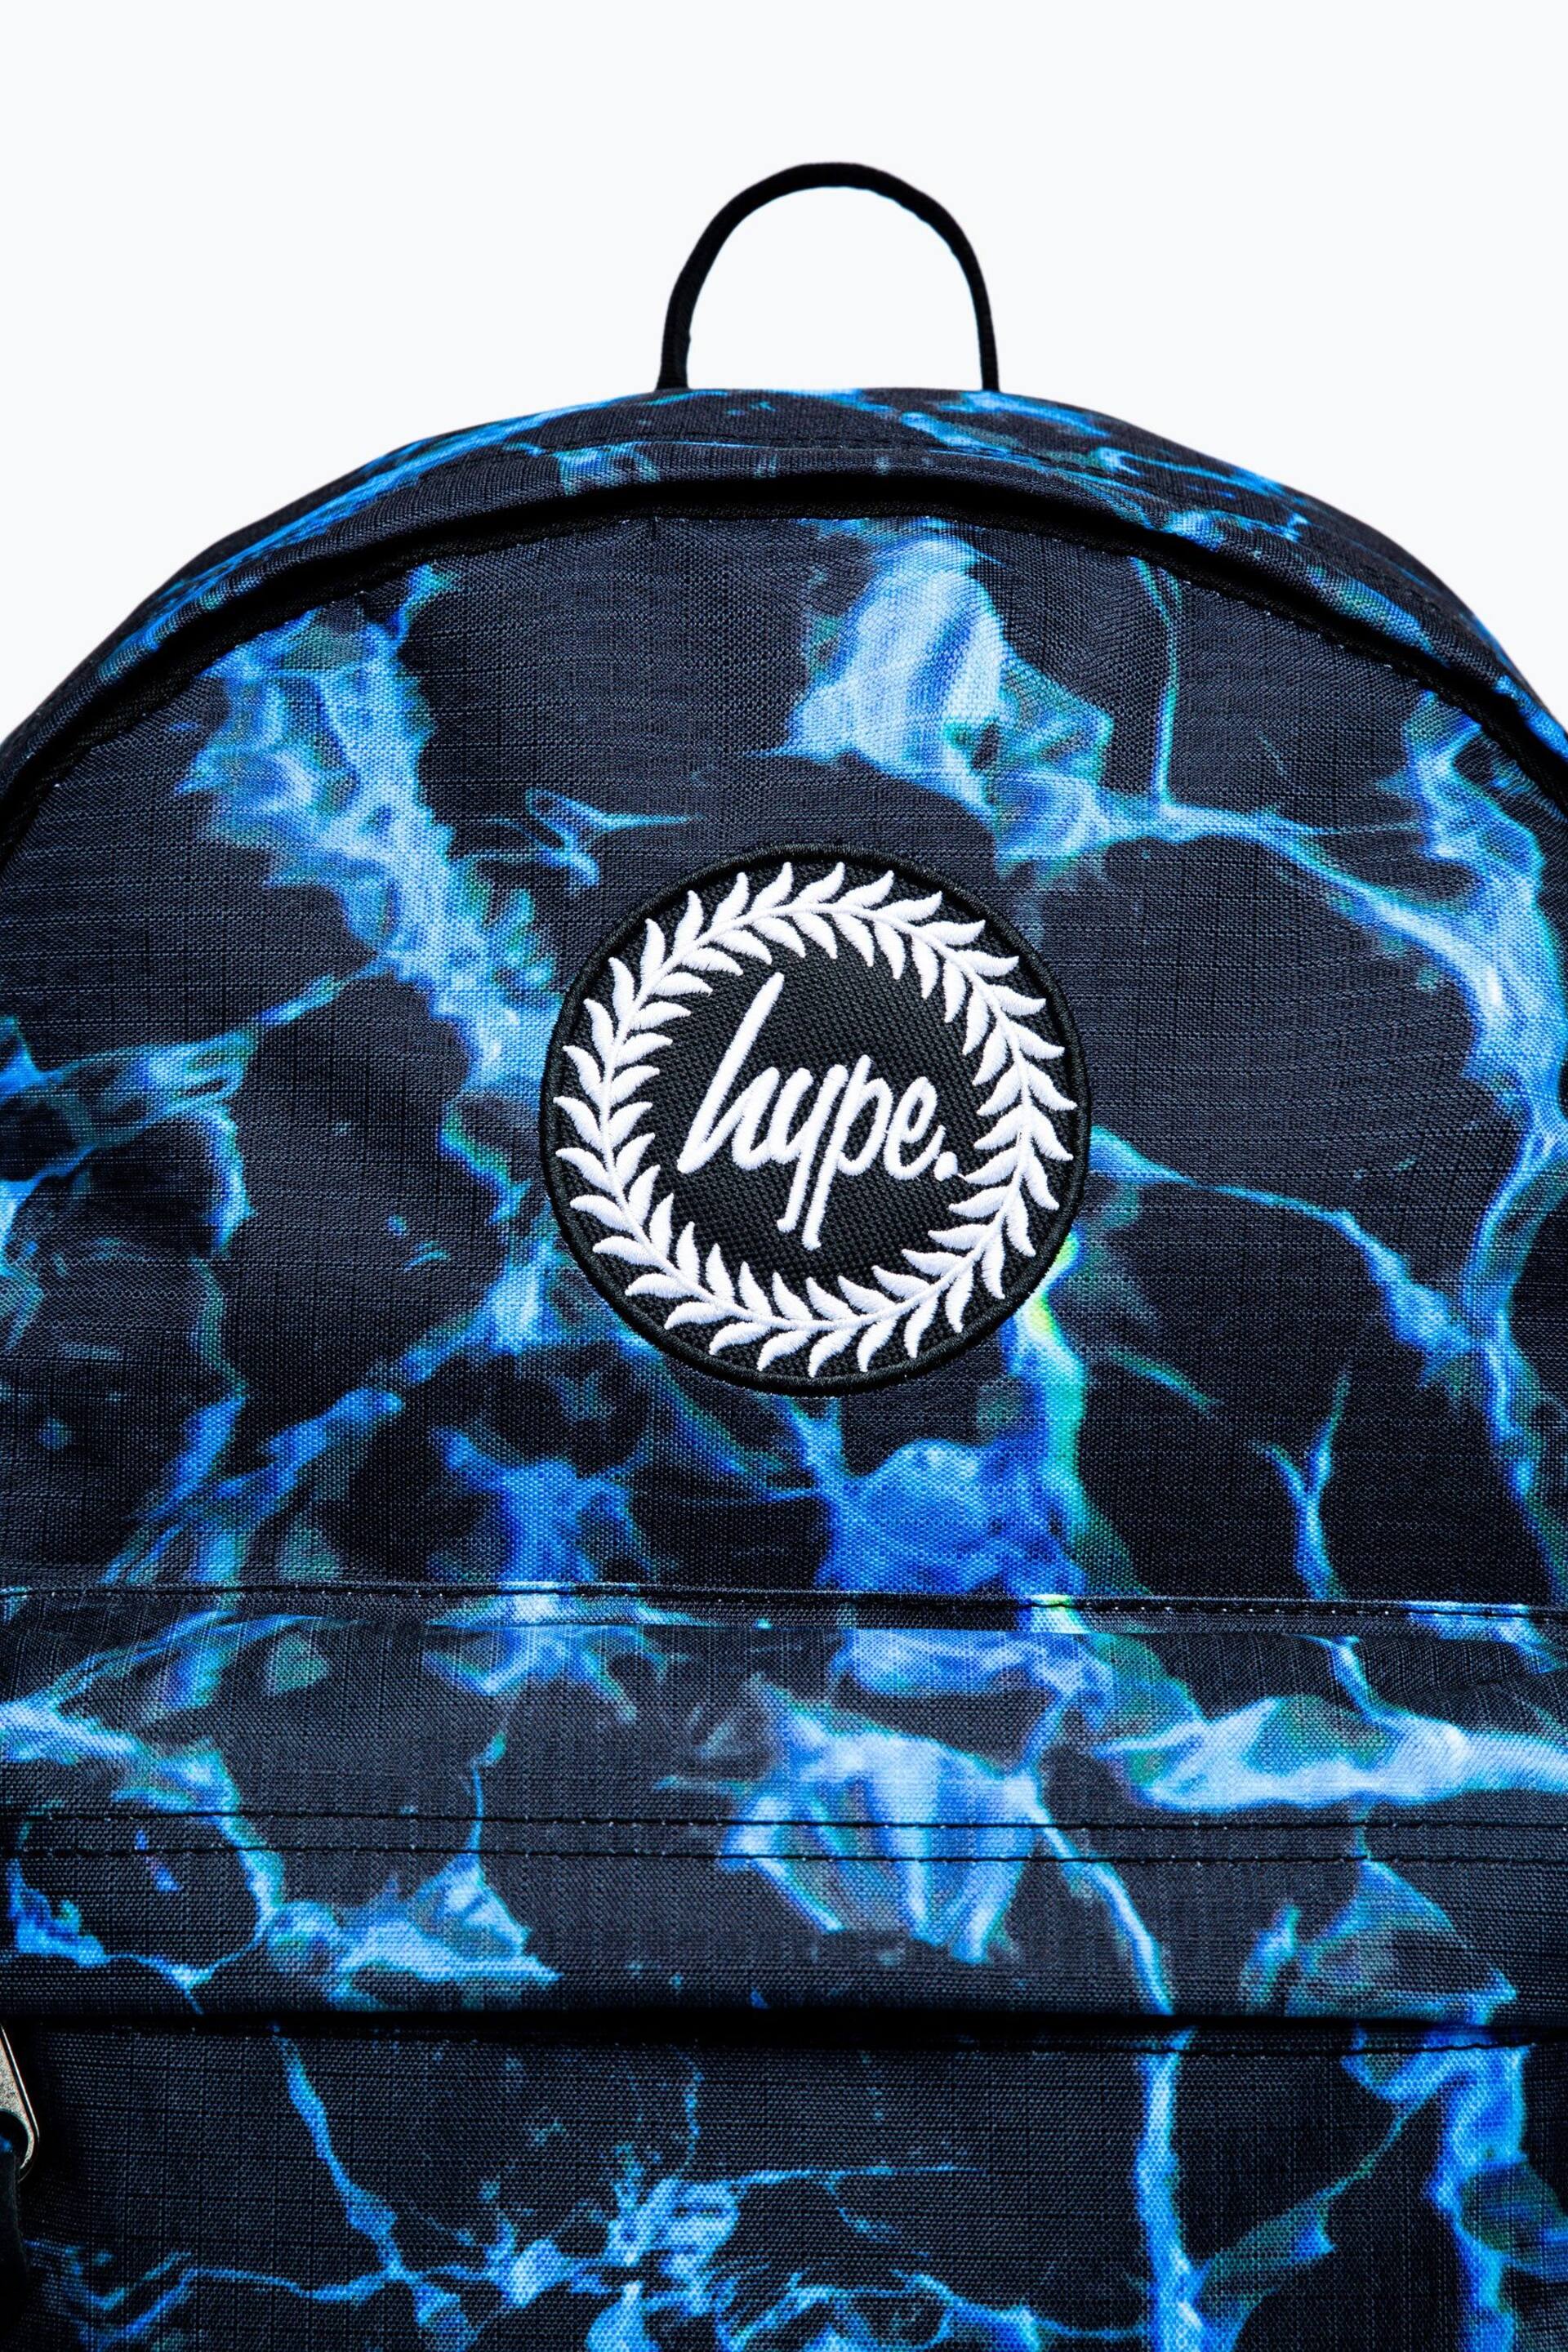 Hype Black XRay Pool Backpack - Image 6 of 8